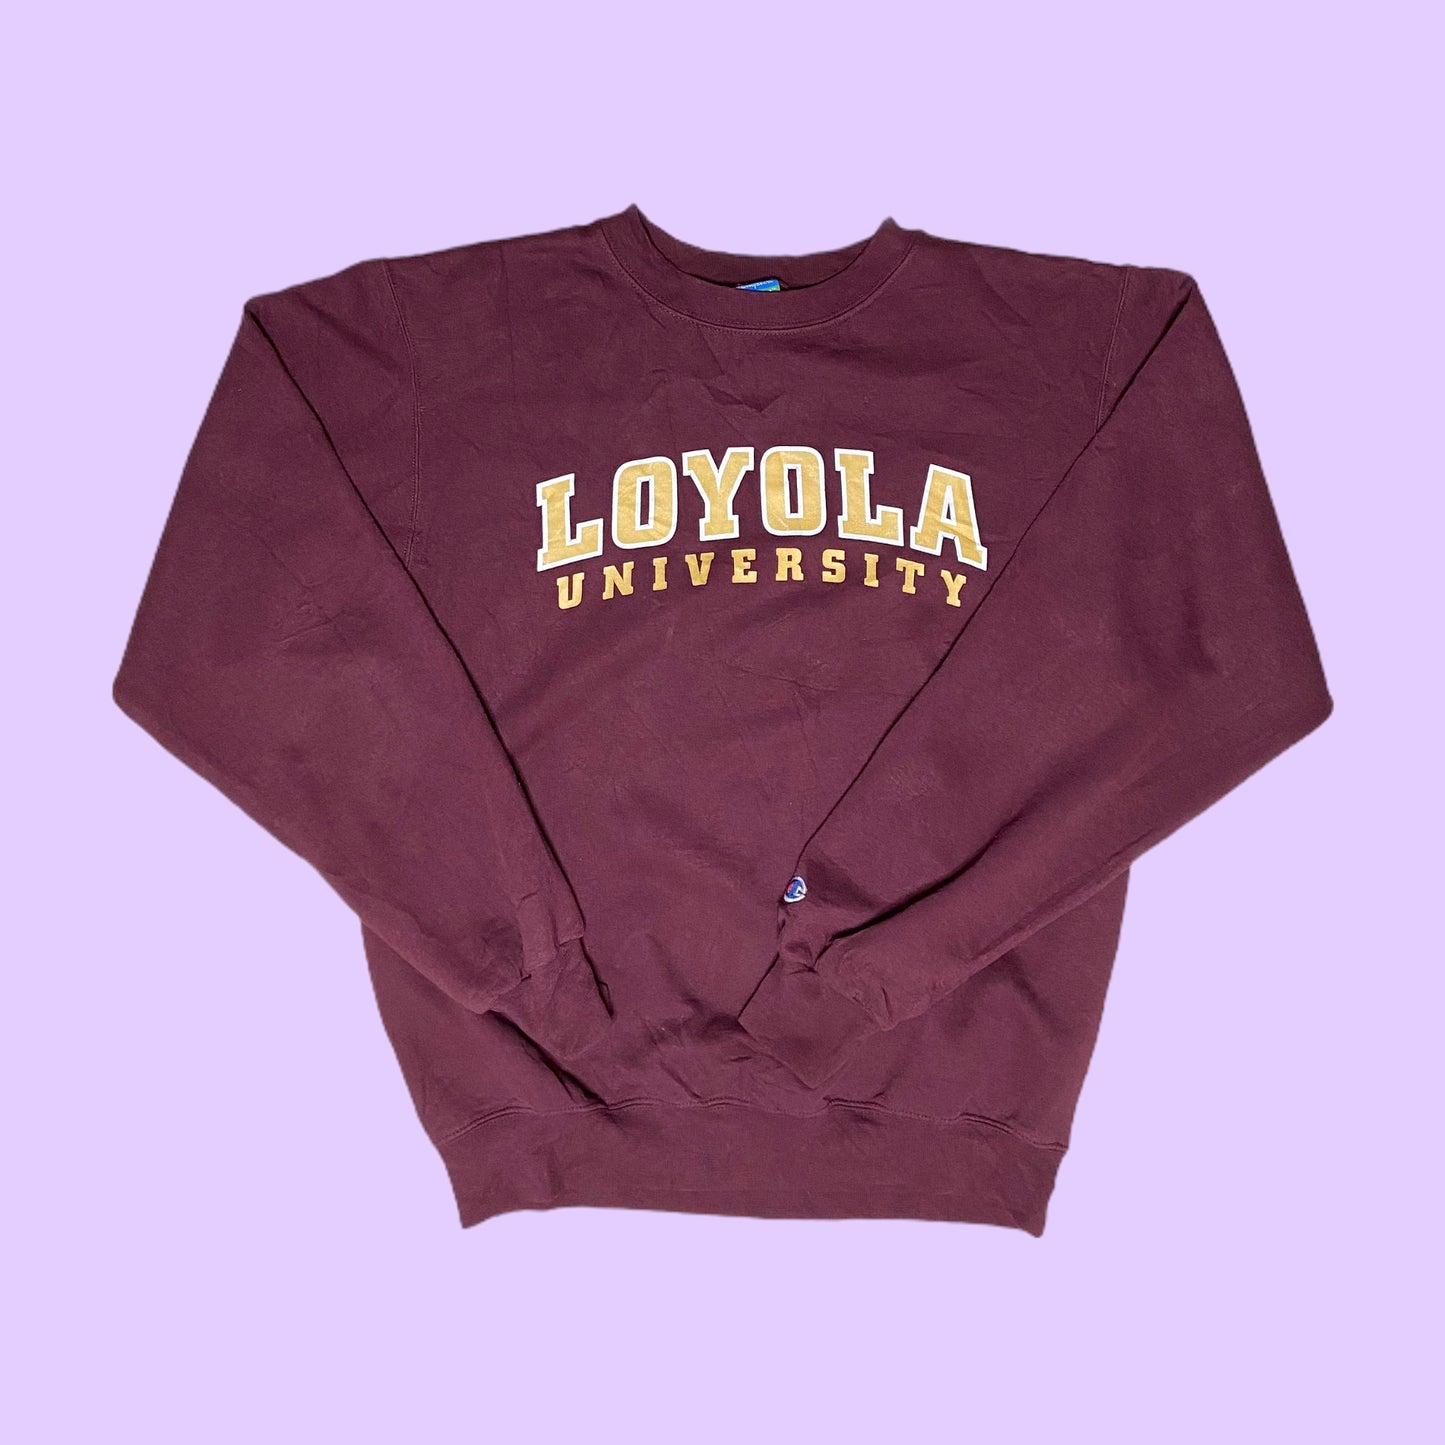 Vintage Champion Loyola University Sweater - S